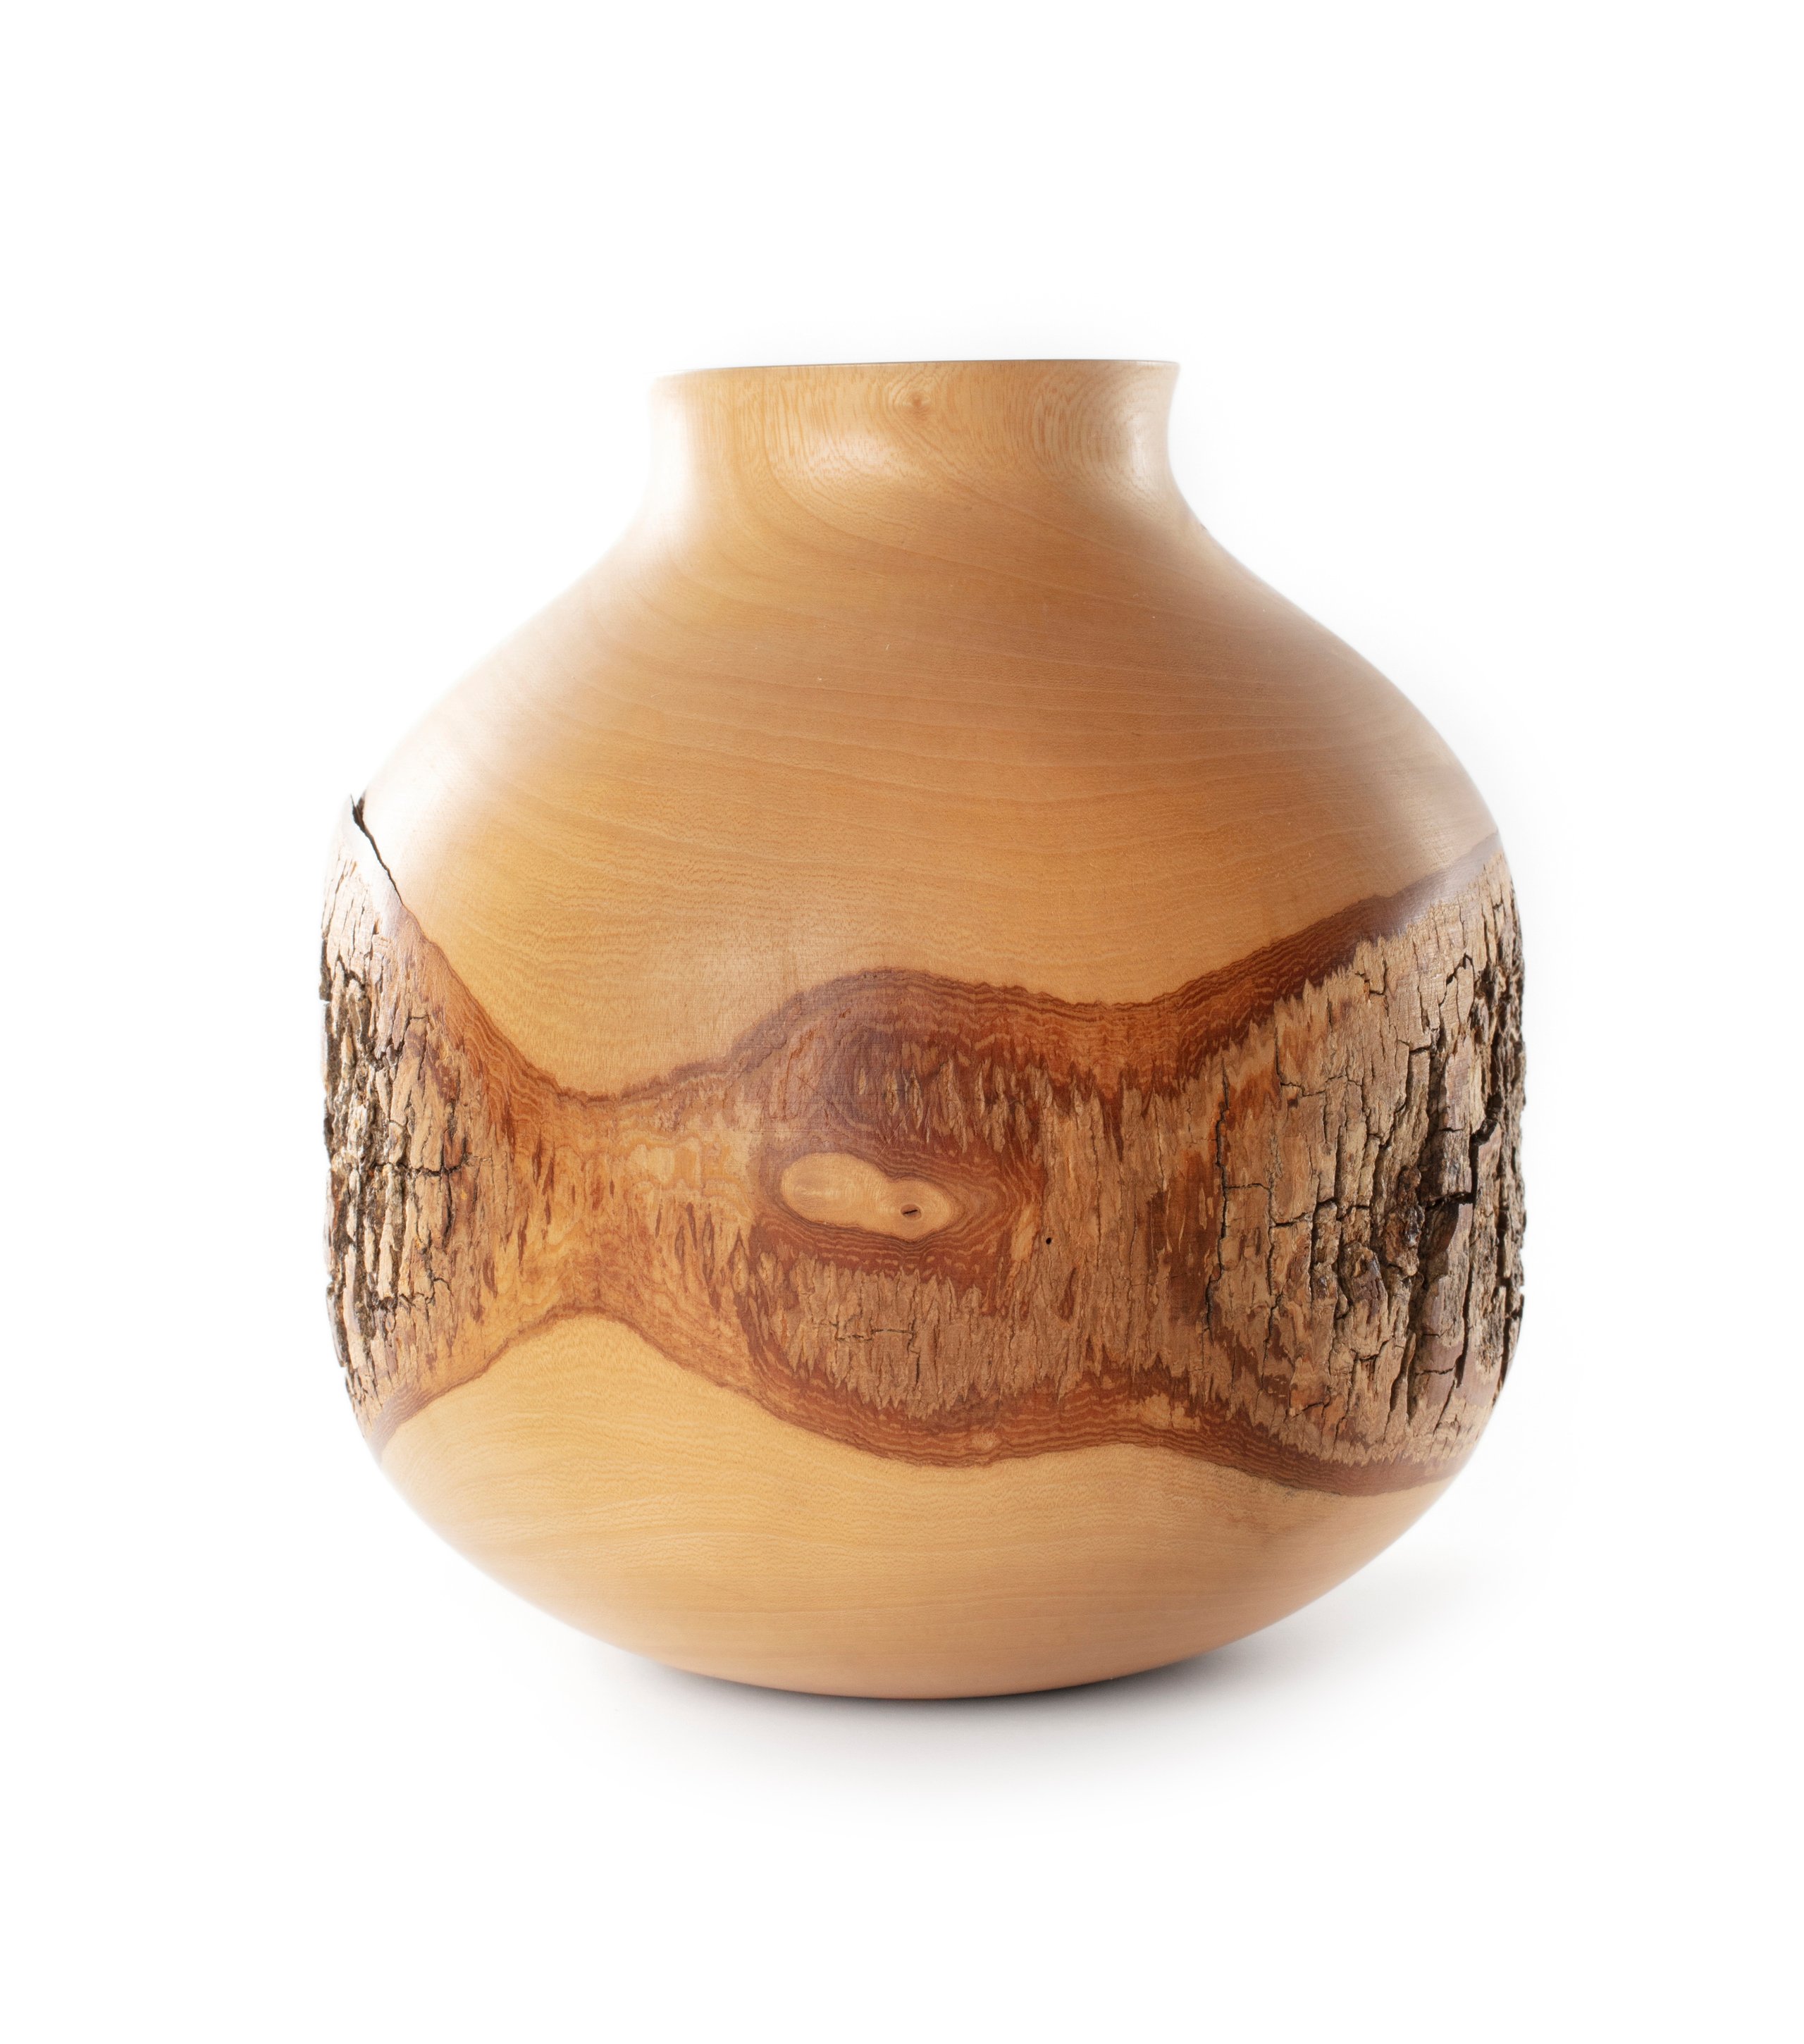 Hollow-turned Jacaranda wood vase by Alan Schoultz